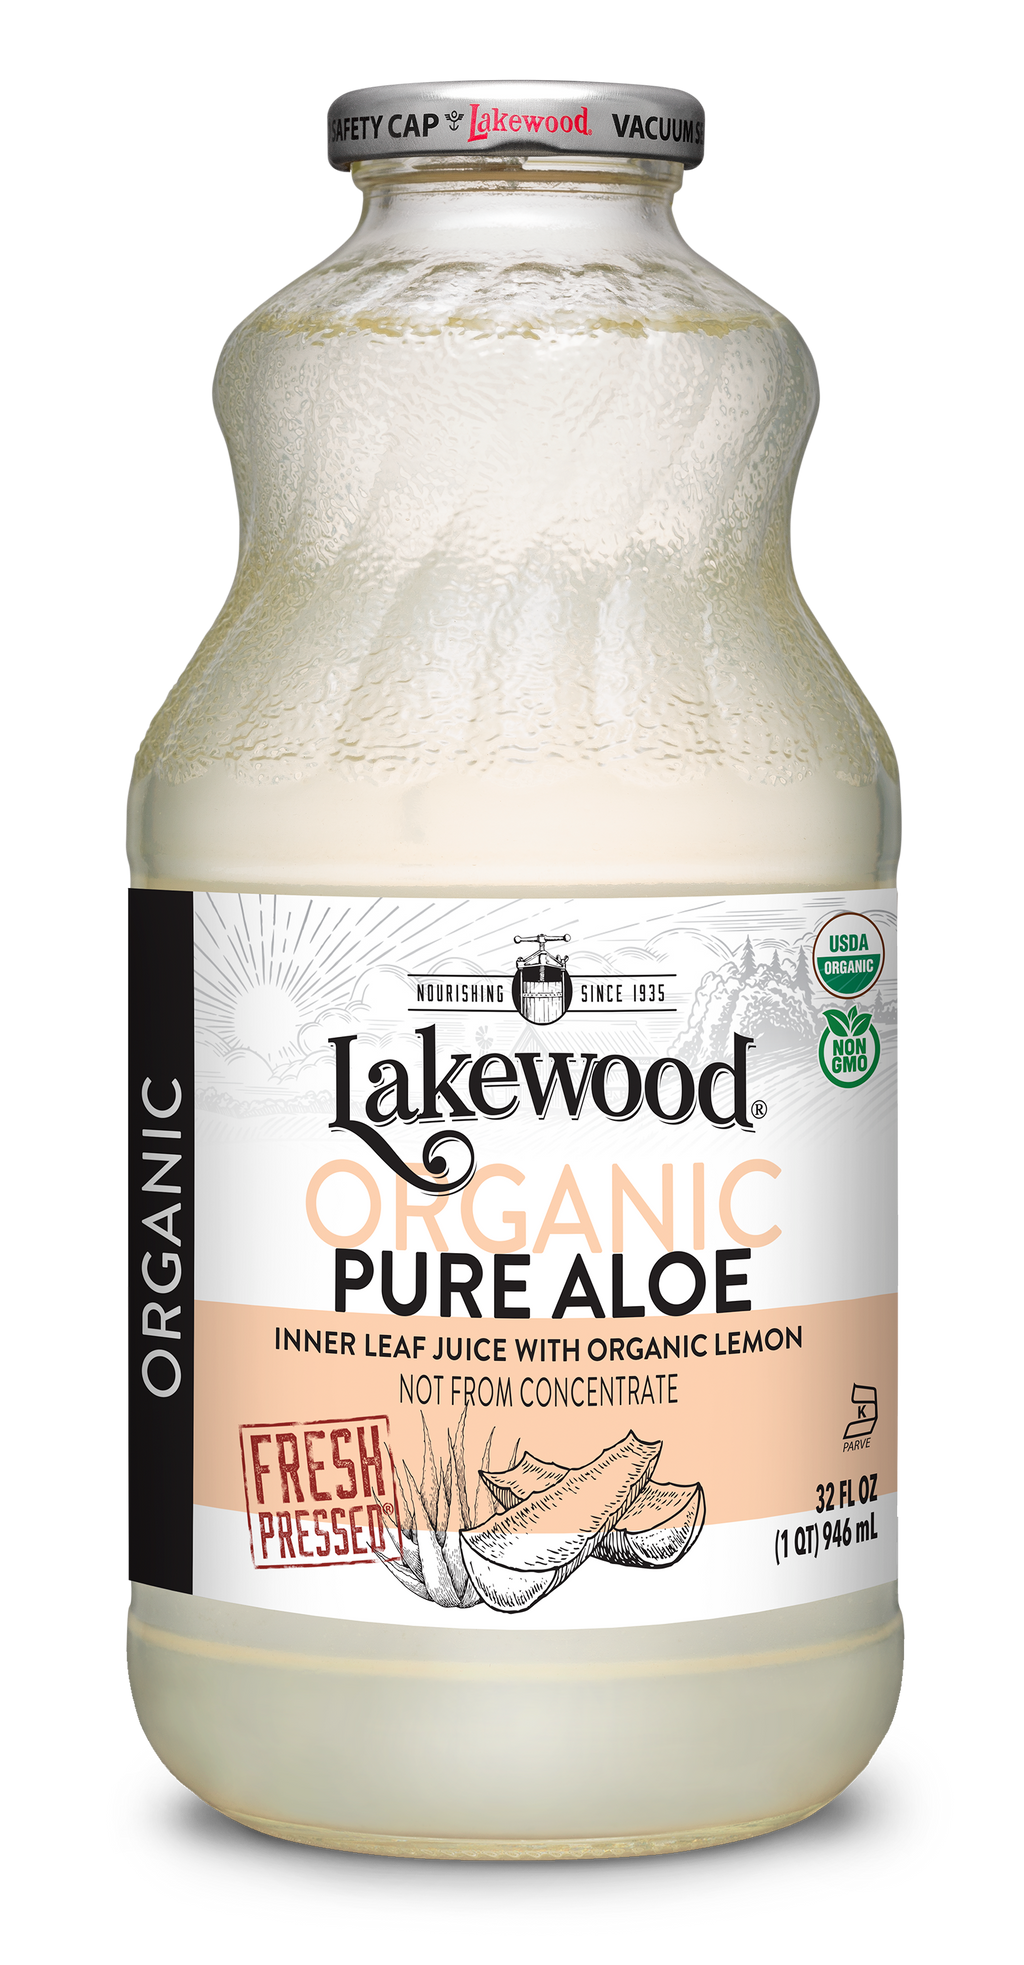 lakewood-organic-pure-aloe-juice-fresh-pressed